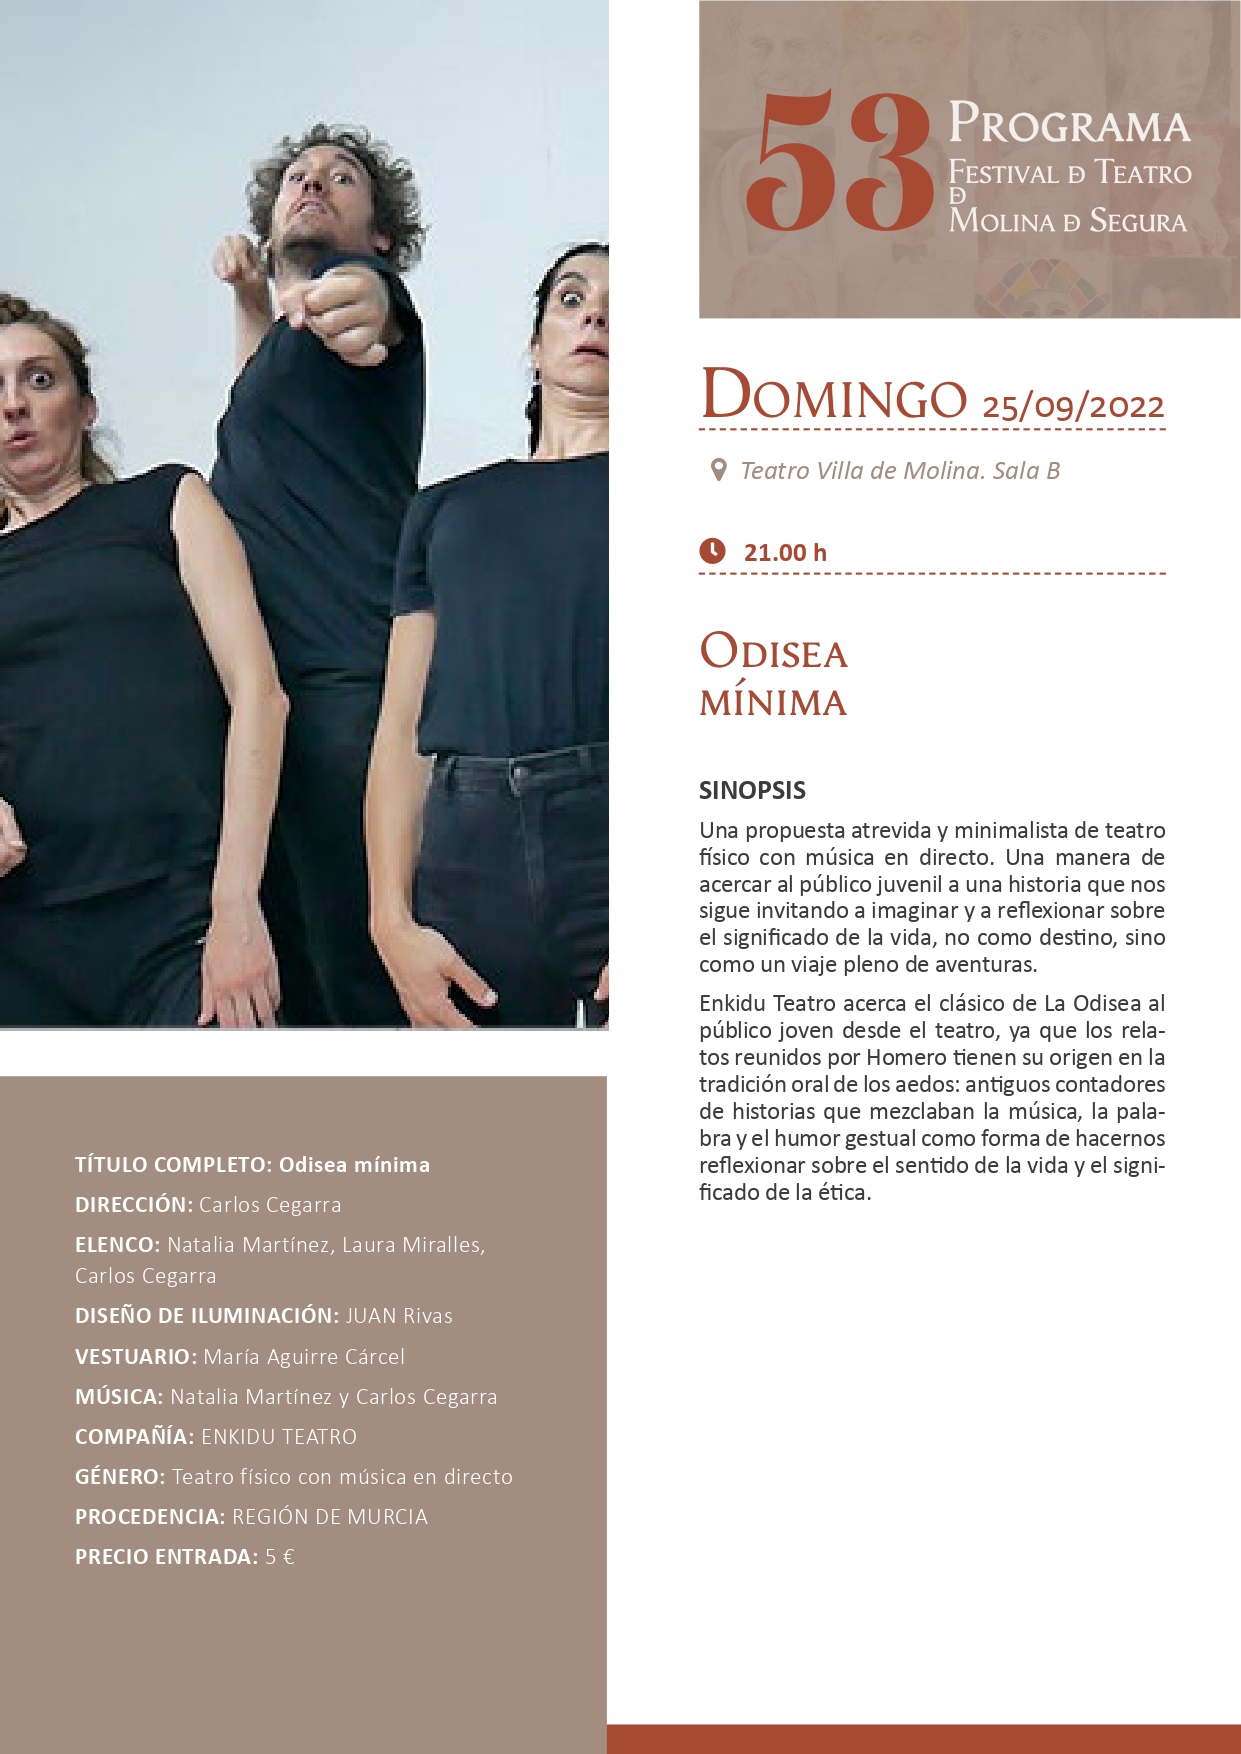 Programa-53-Festival-de-Teatro-de-Molina-de-Segura_page-0012.jpg